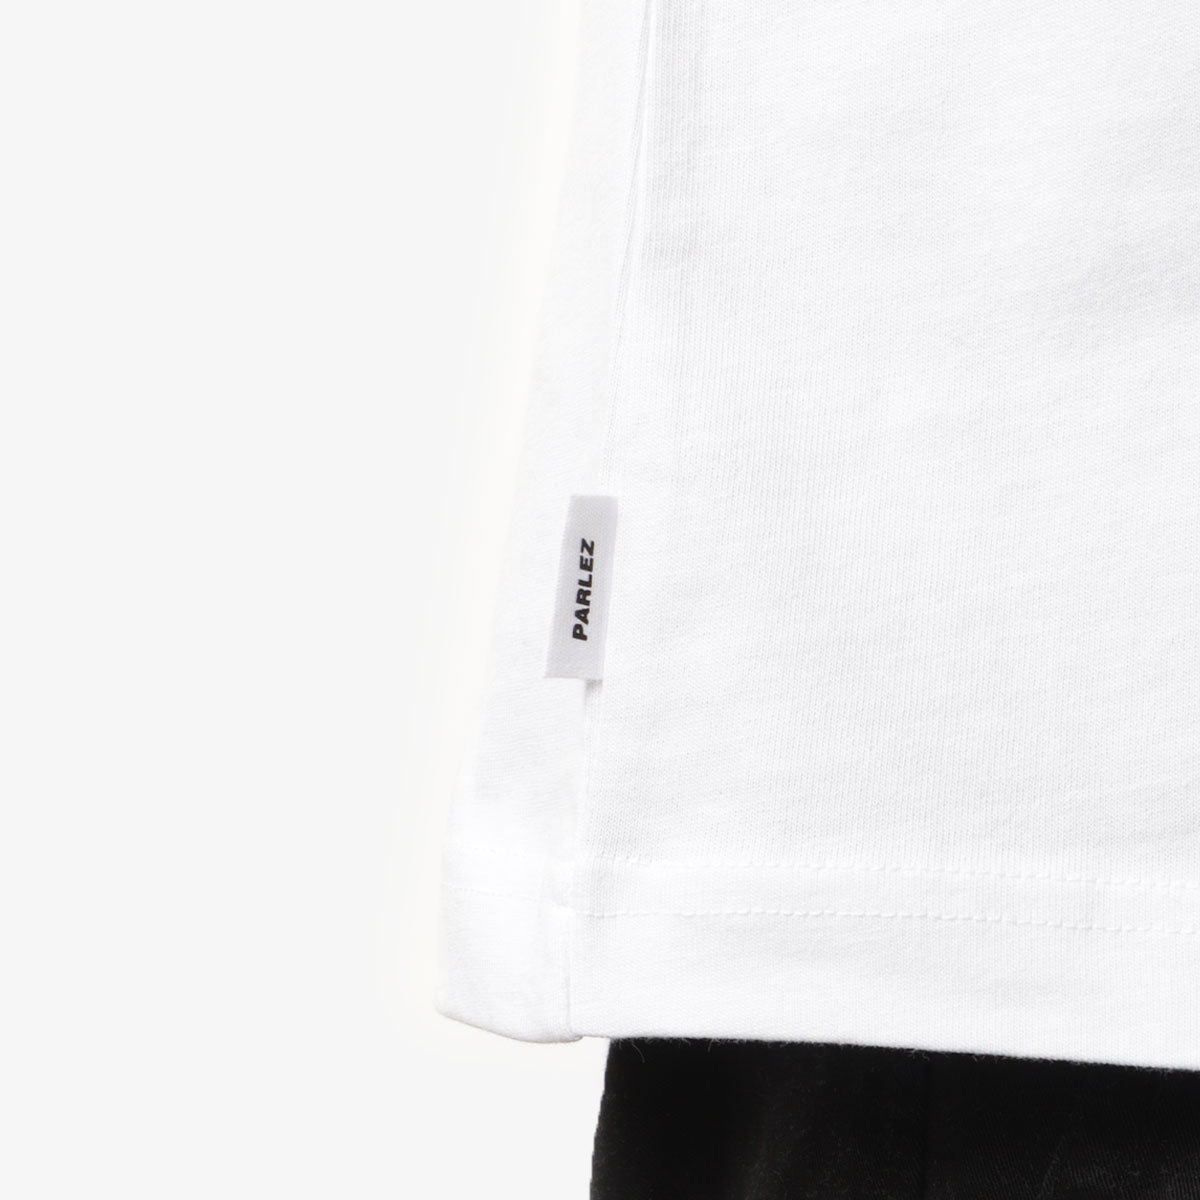 Parlez Link T-Shirt, White, Detail Shot 5